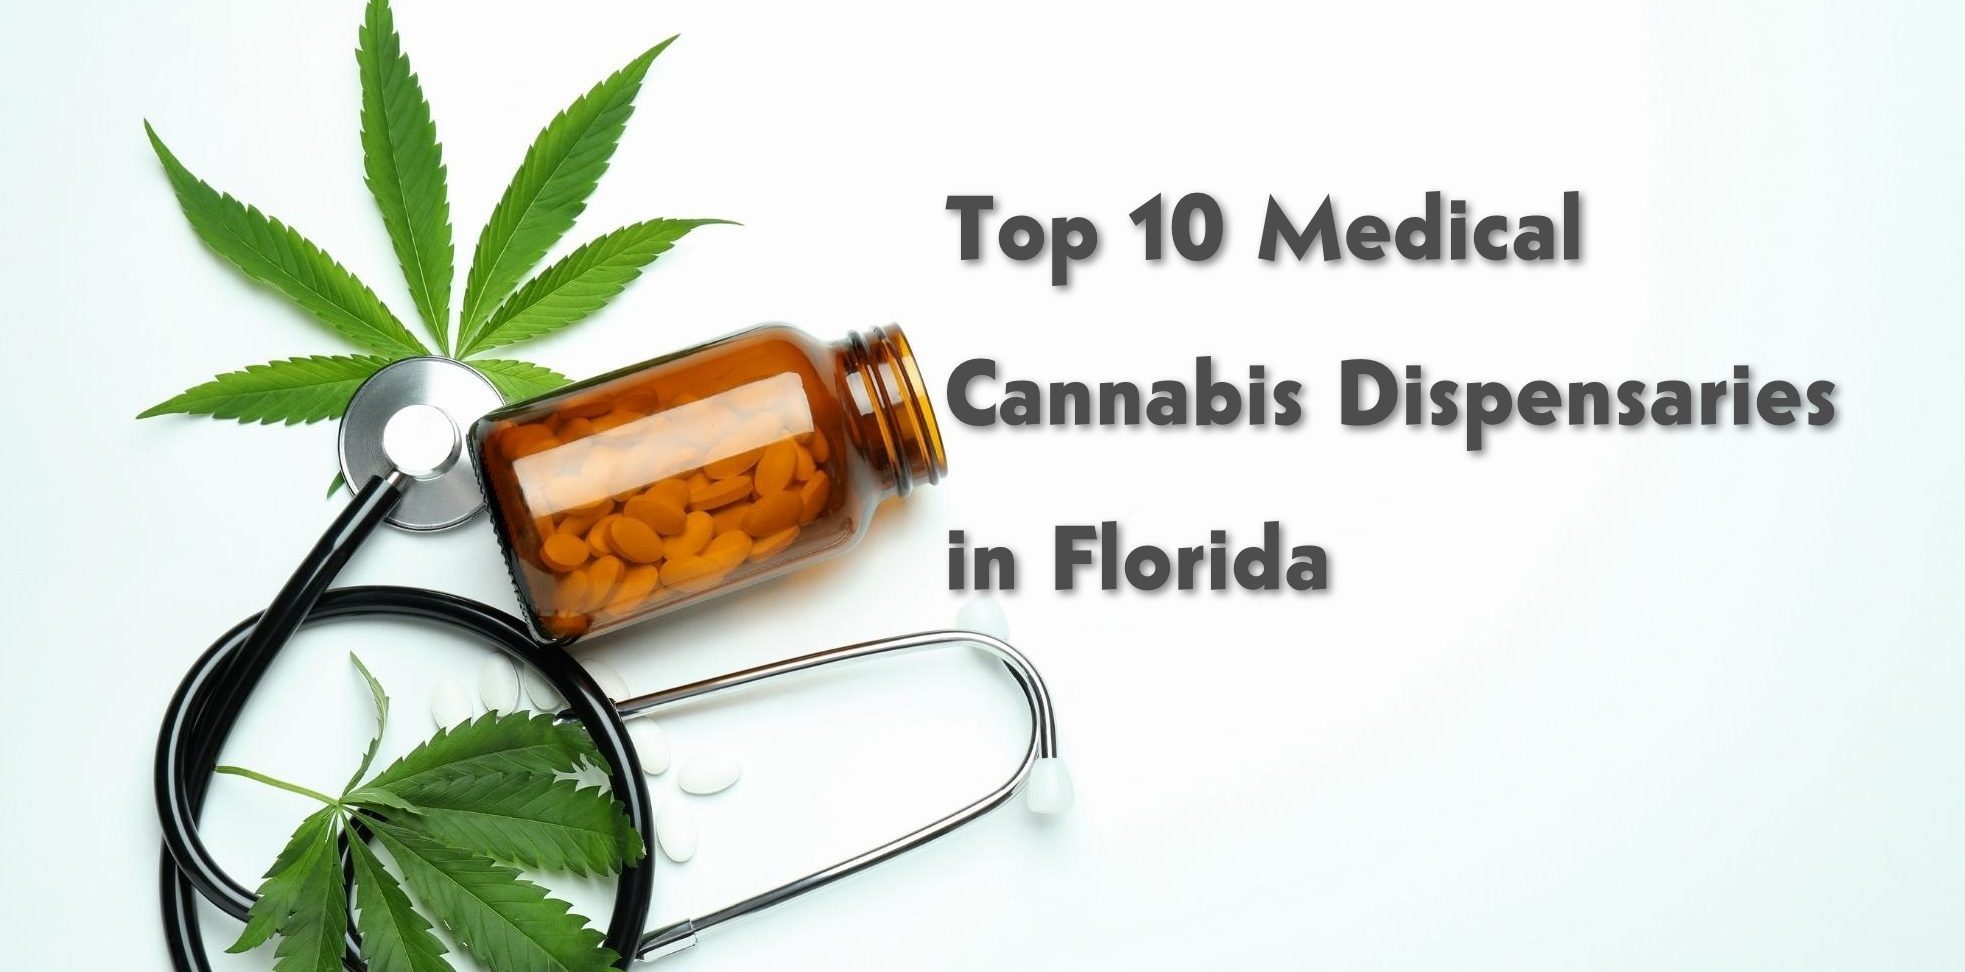 Top 10 Medical Cannabis Dispensaries in Florida